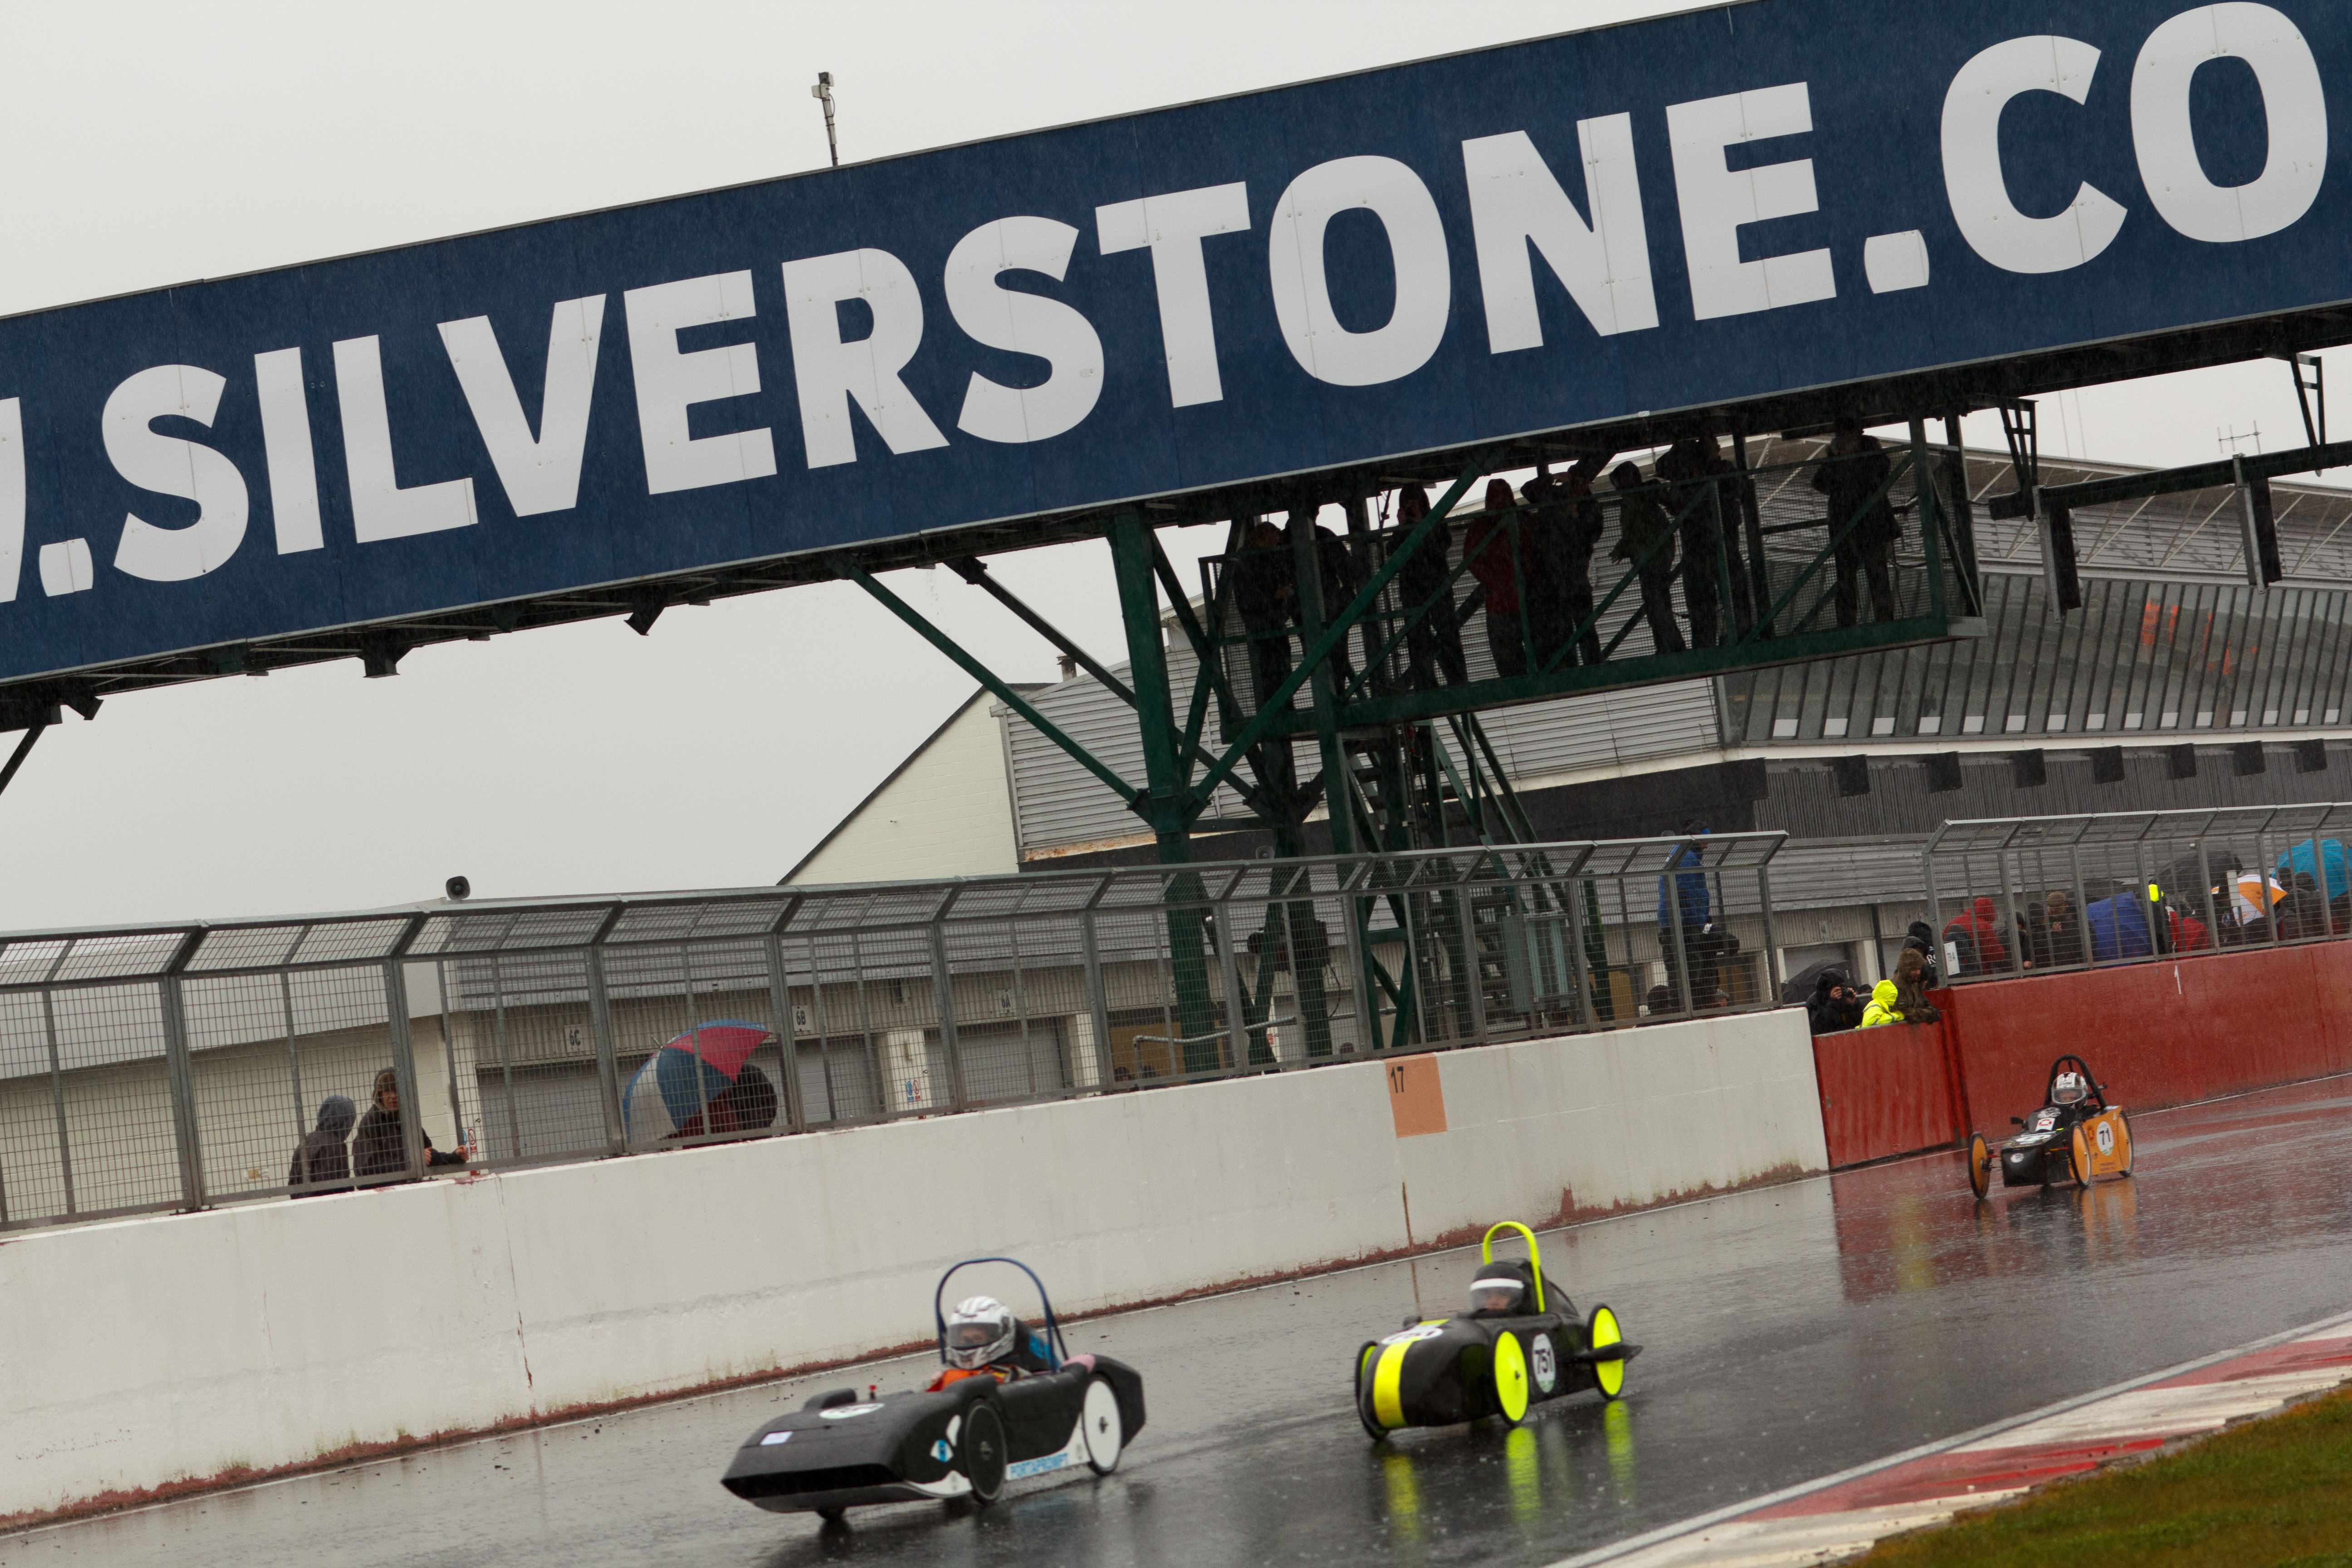 Silverstone SOCC 2012